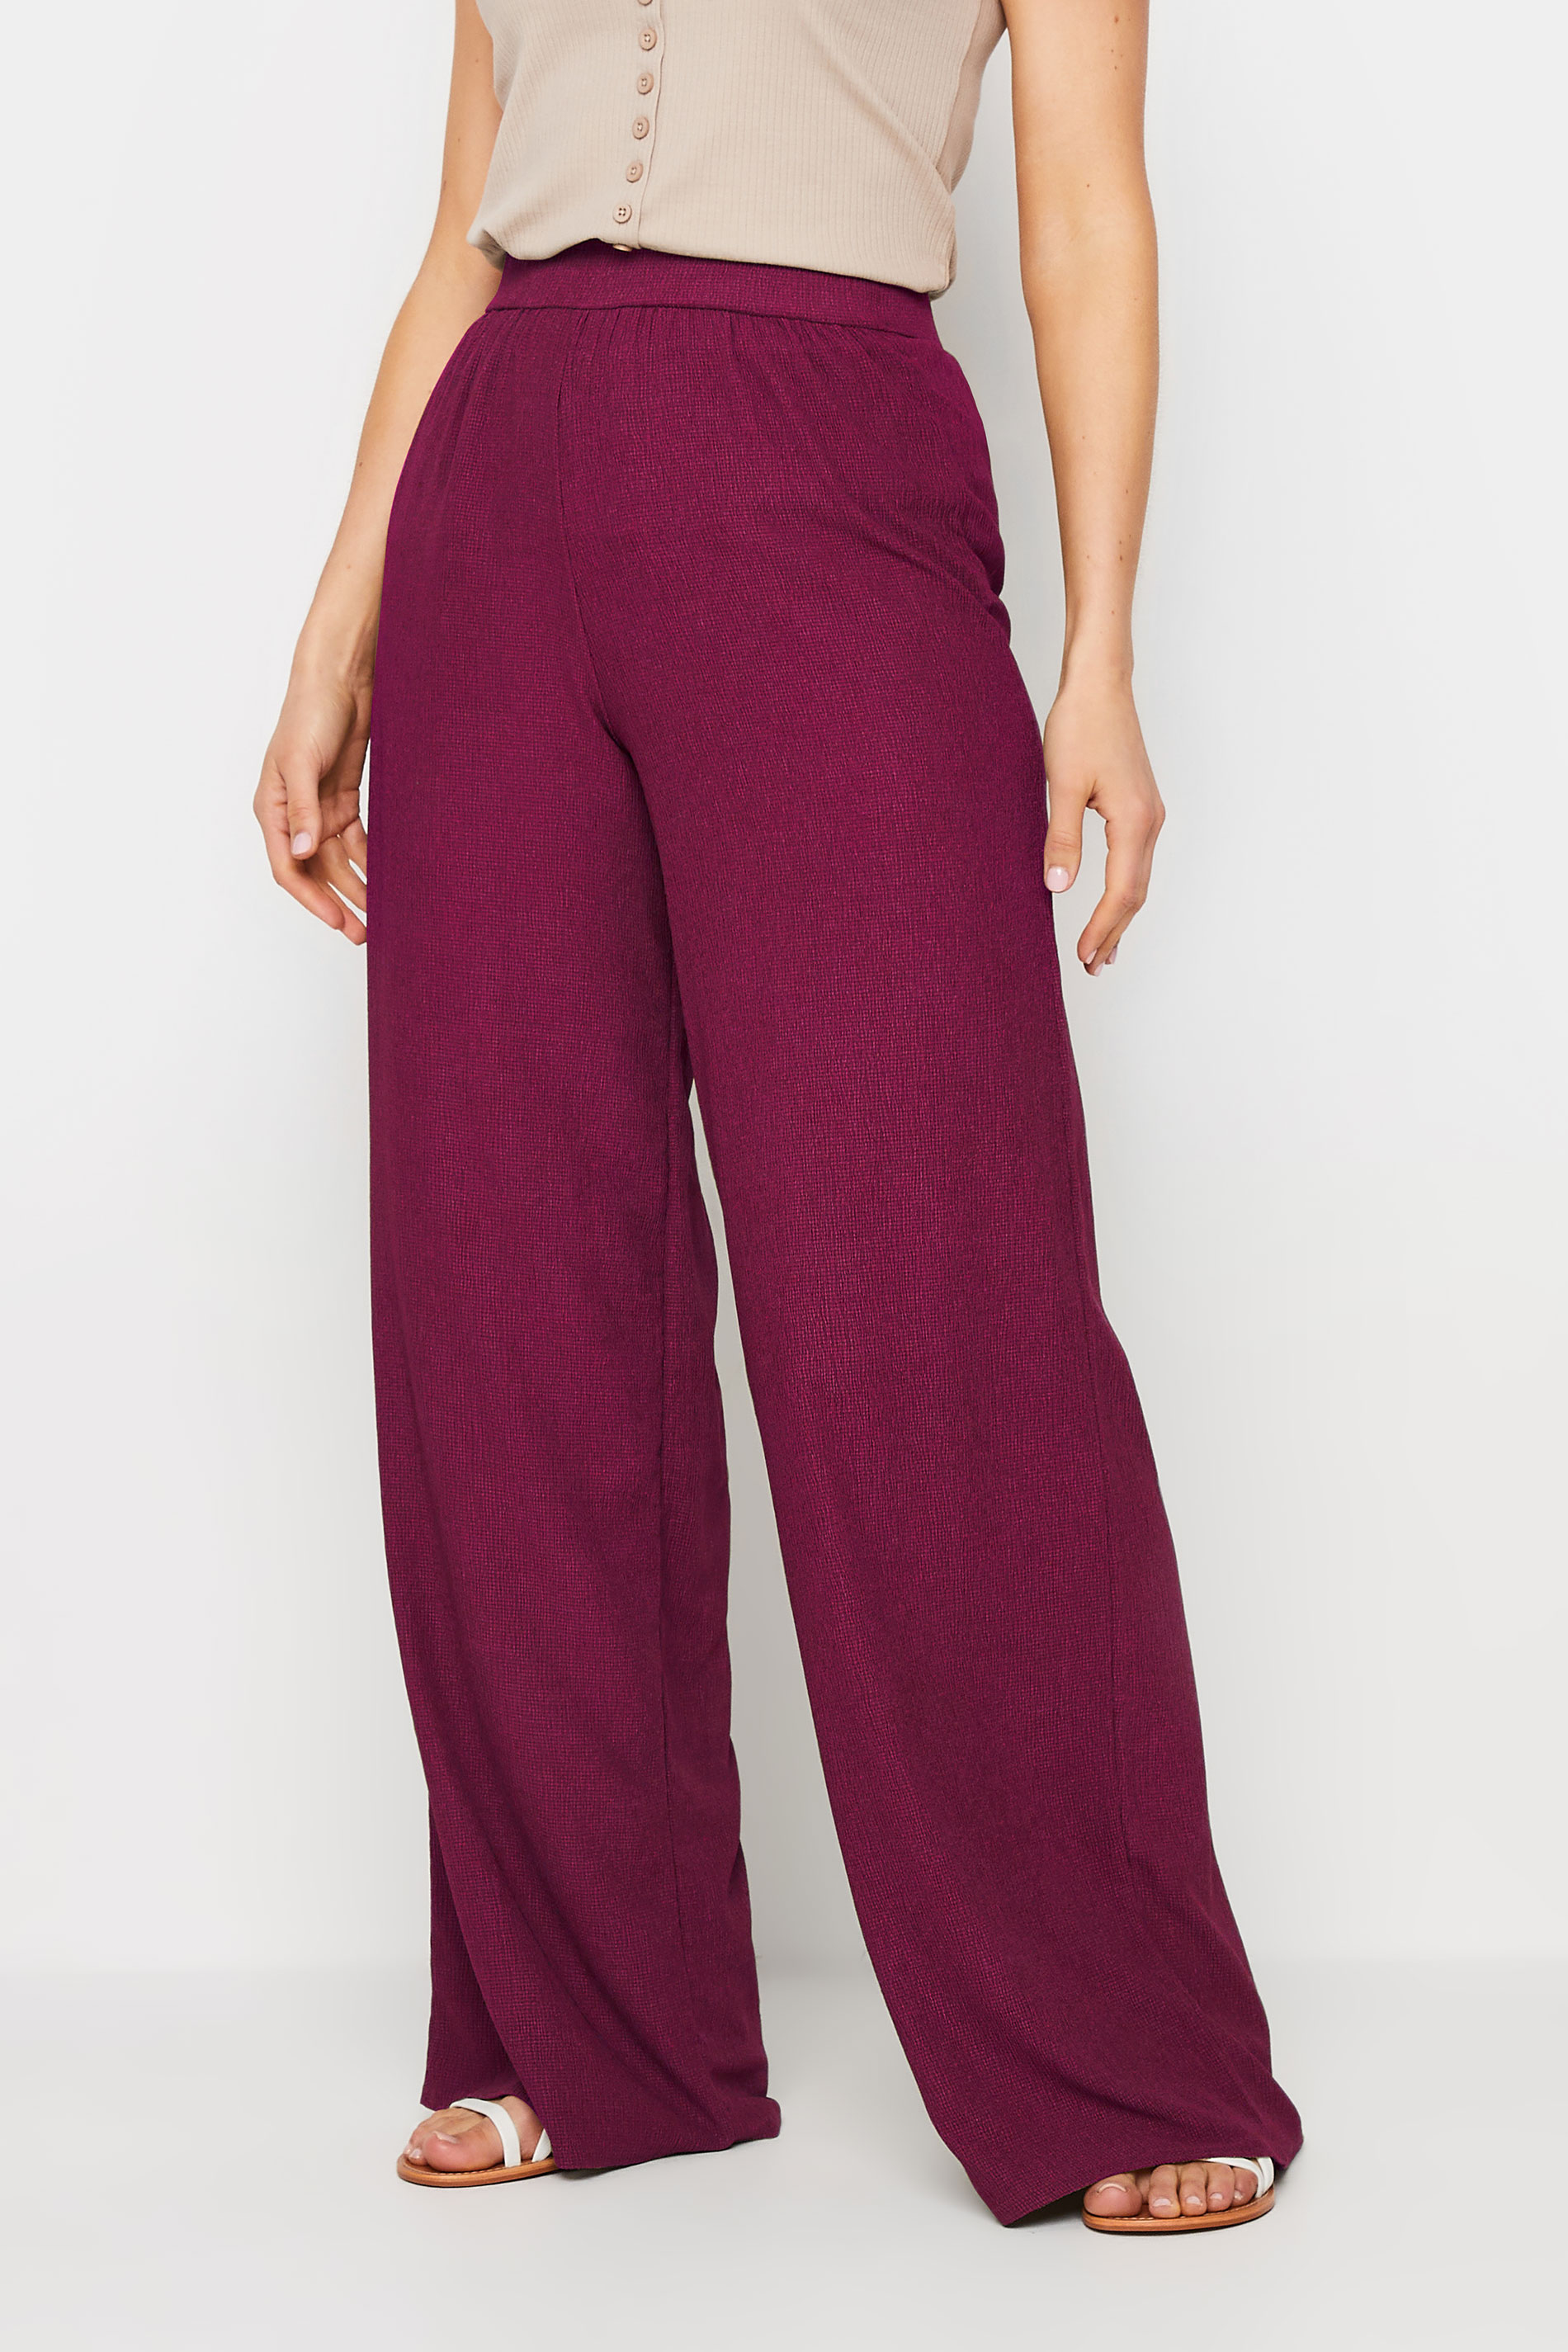 LTS Tall Women's Berry Pink Textured Wide Leg Trousers | Long Tall Sally 2